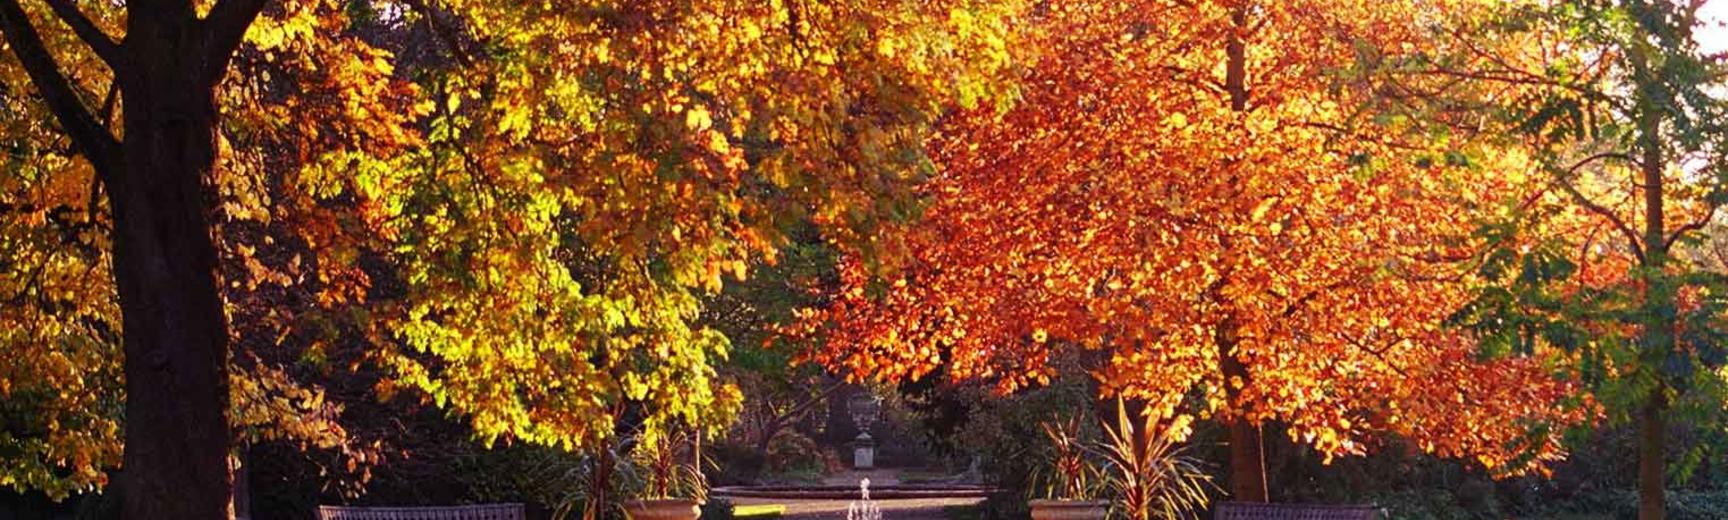 oxford botanic garden in autumn